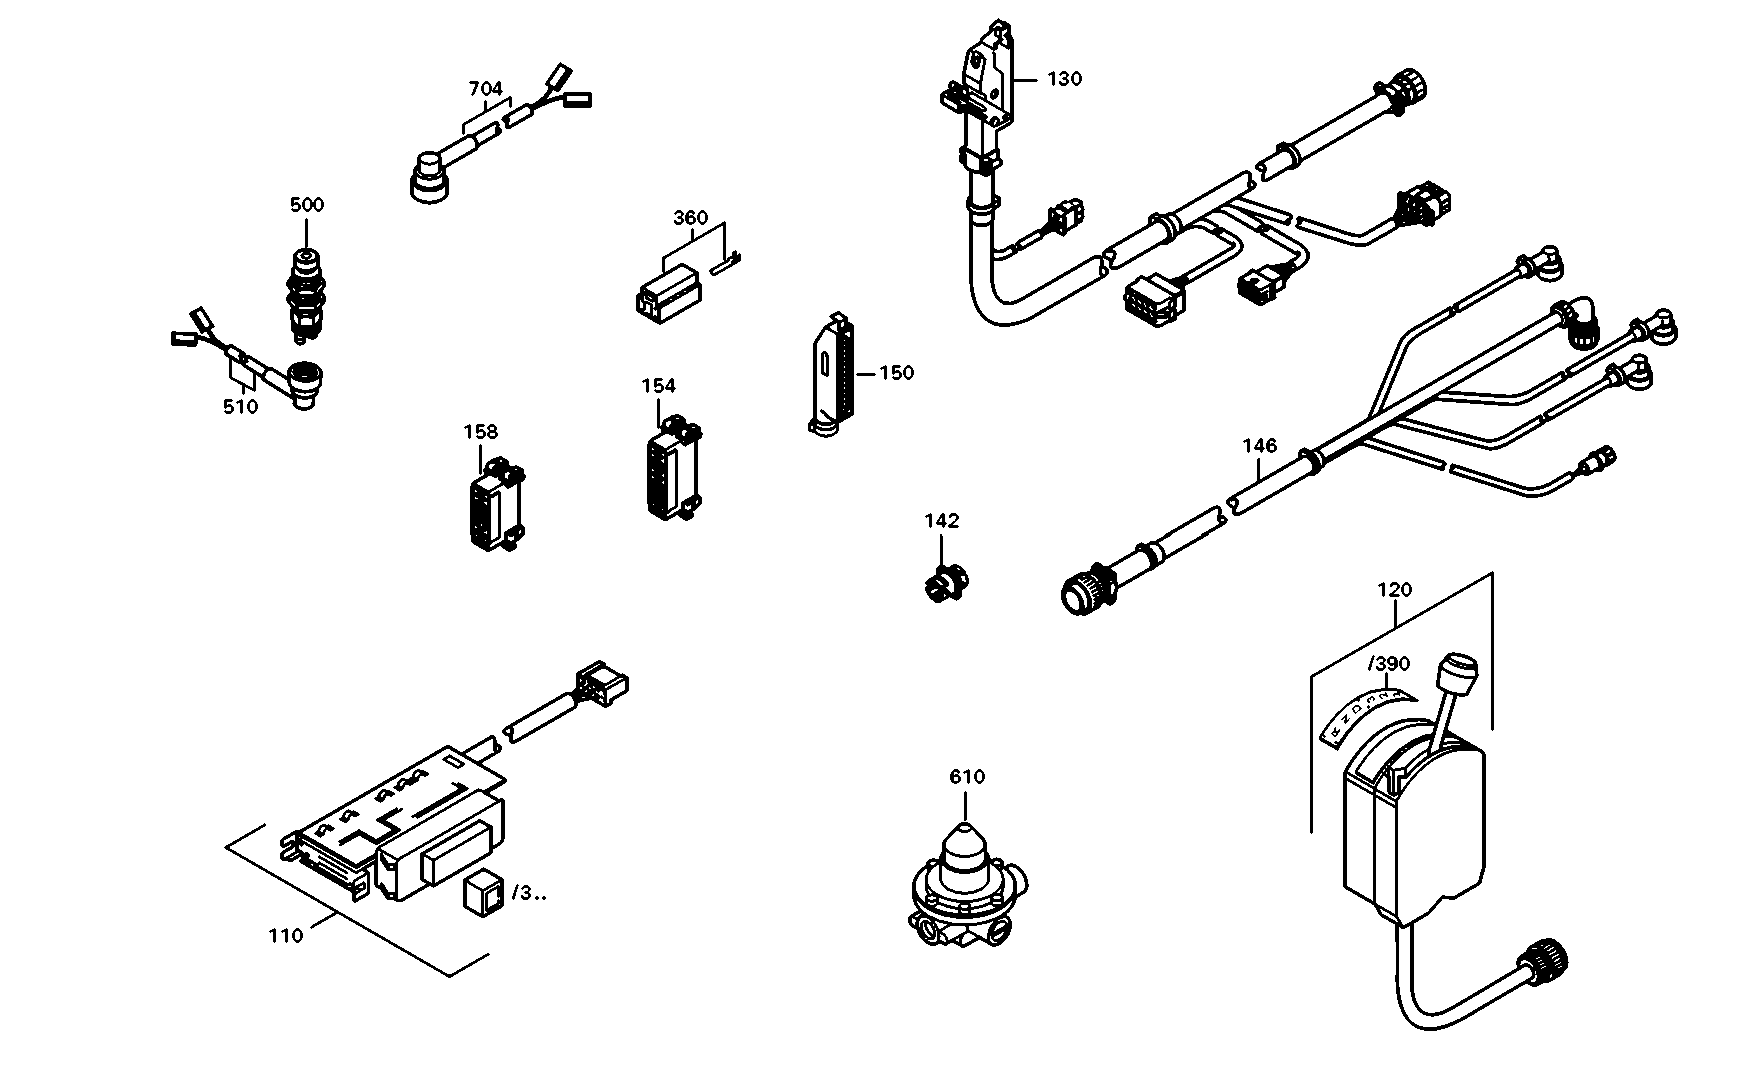 drawing for MAN NUTZFAHRZEUGE AG 002 - FS ELEK (figure 2)